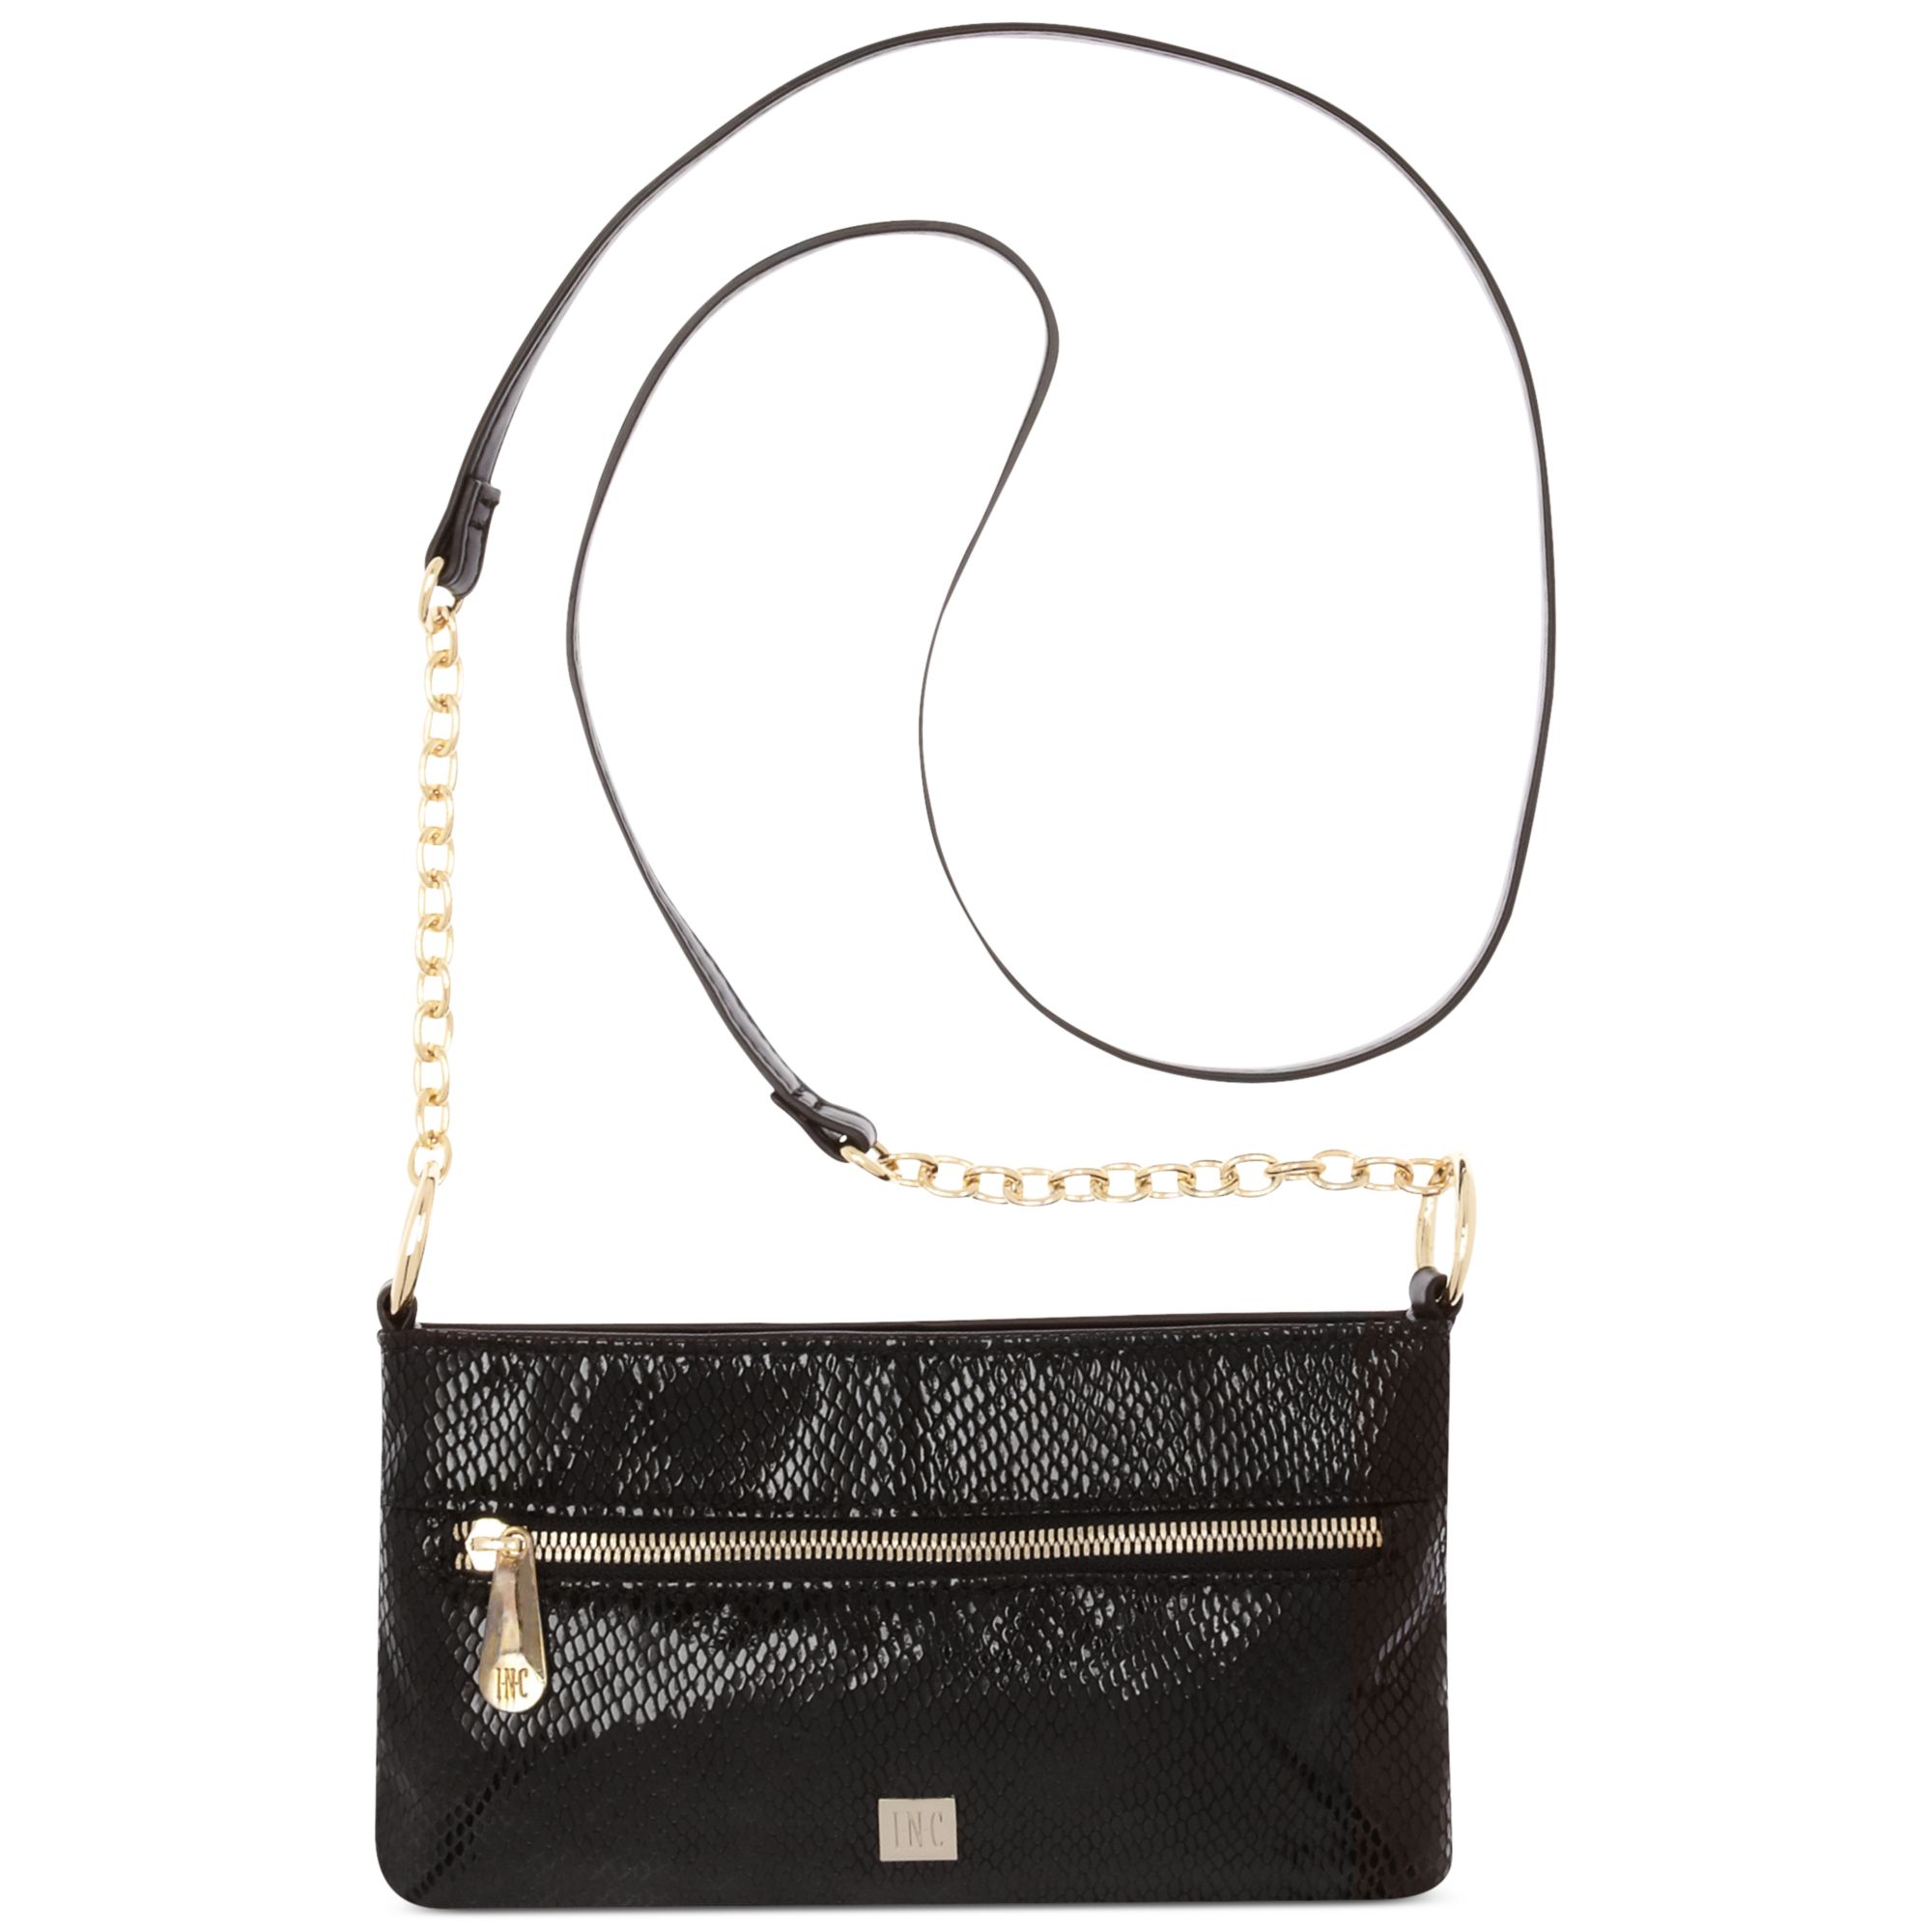 Lyst - Inc International Concepts Inc Handbag Mara Mini Leather ...